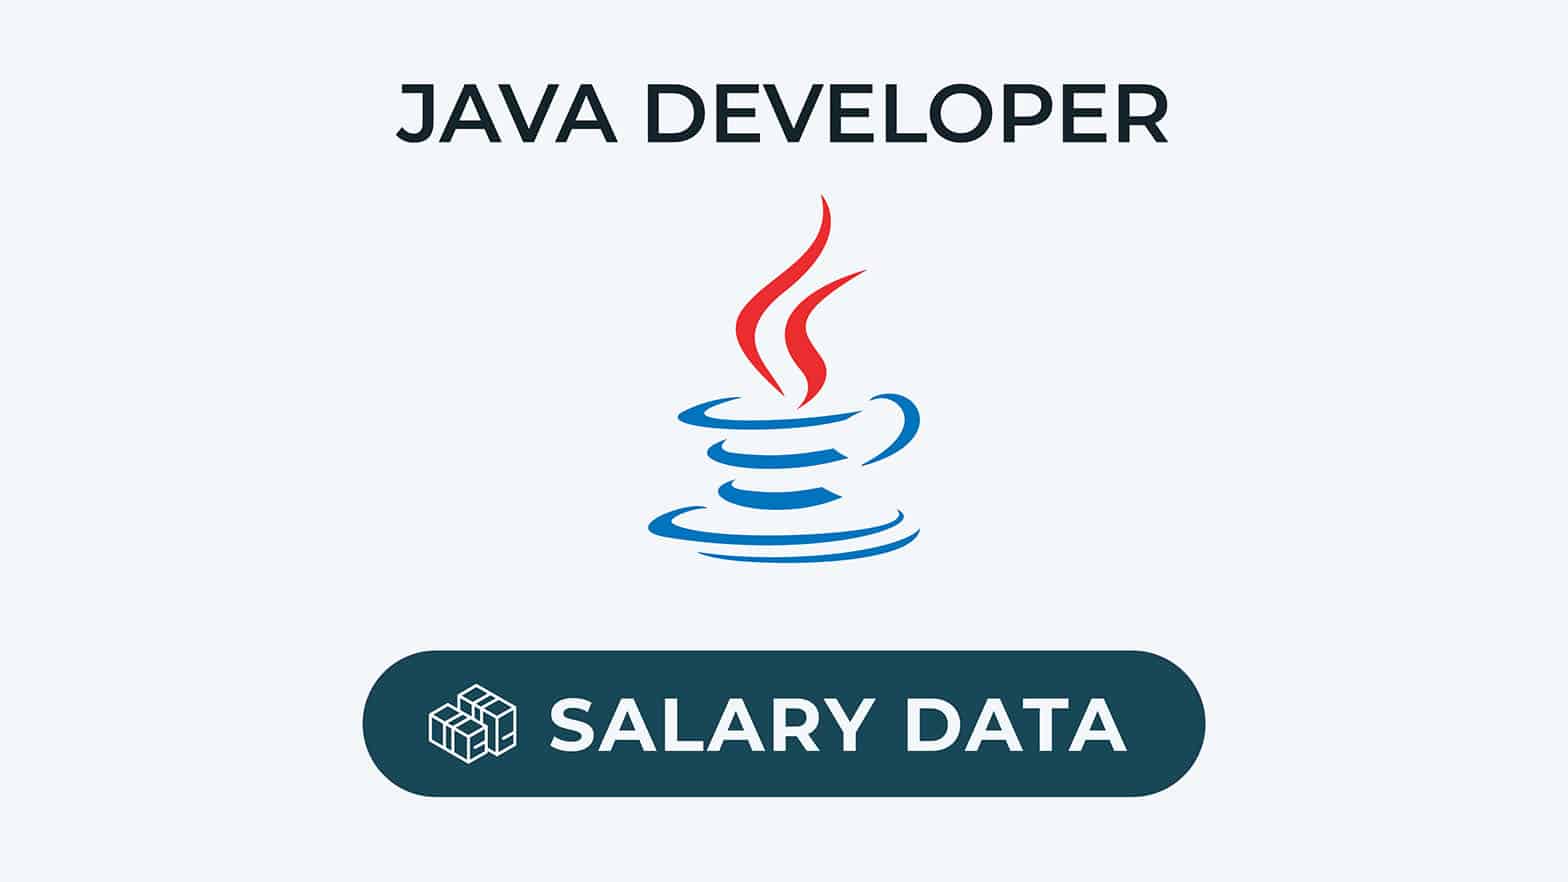 Údaje o platech vývojářů v jazyce Java